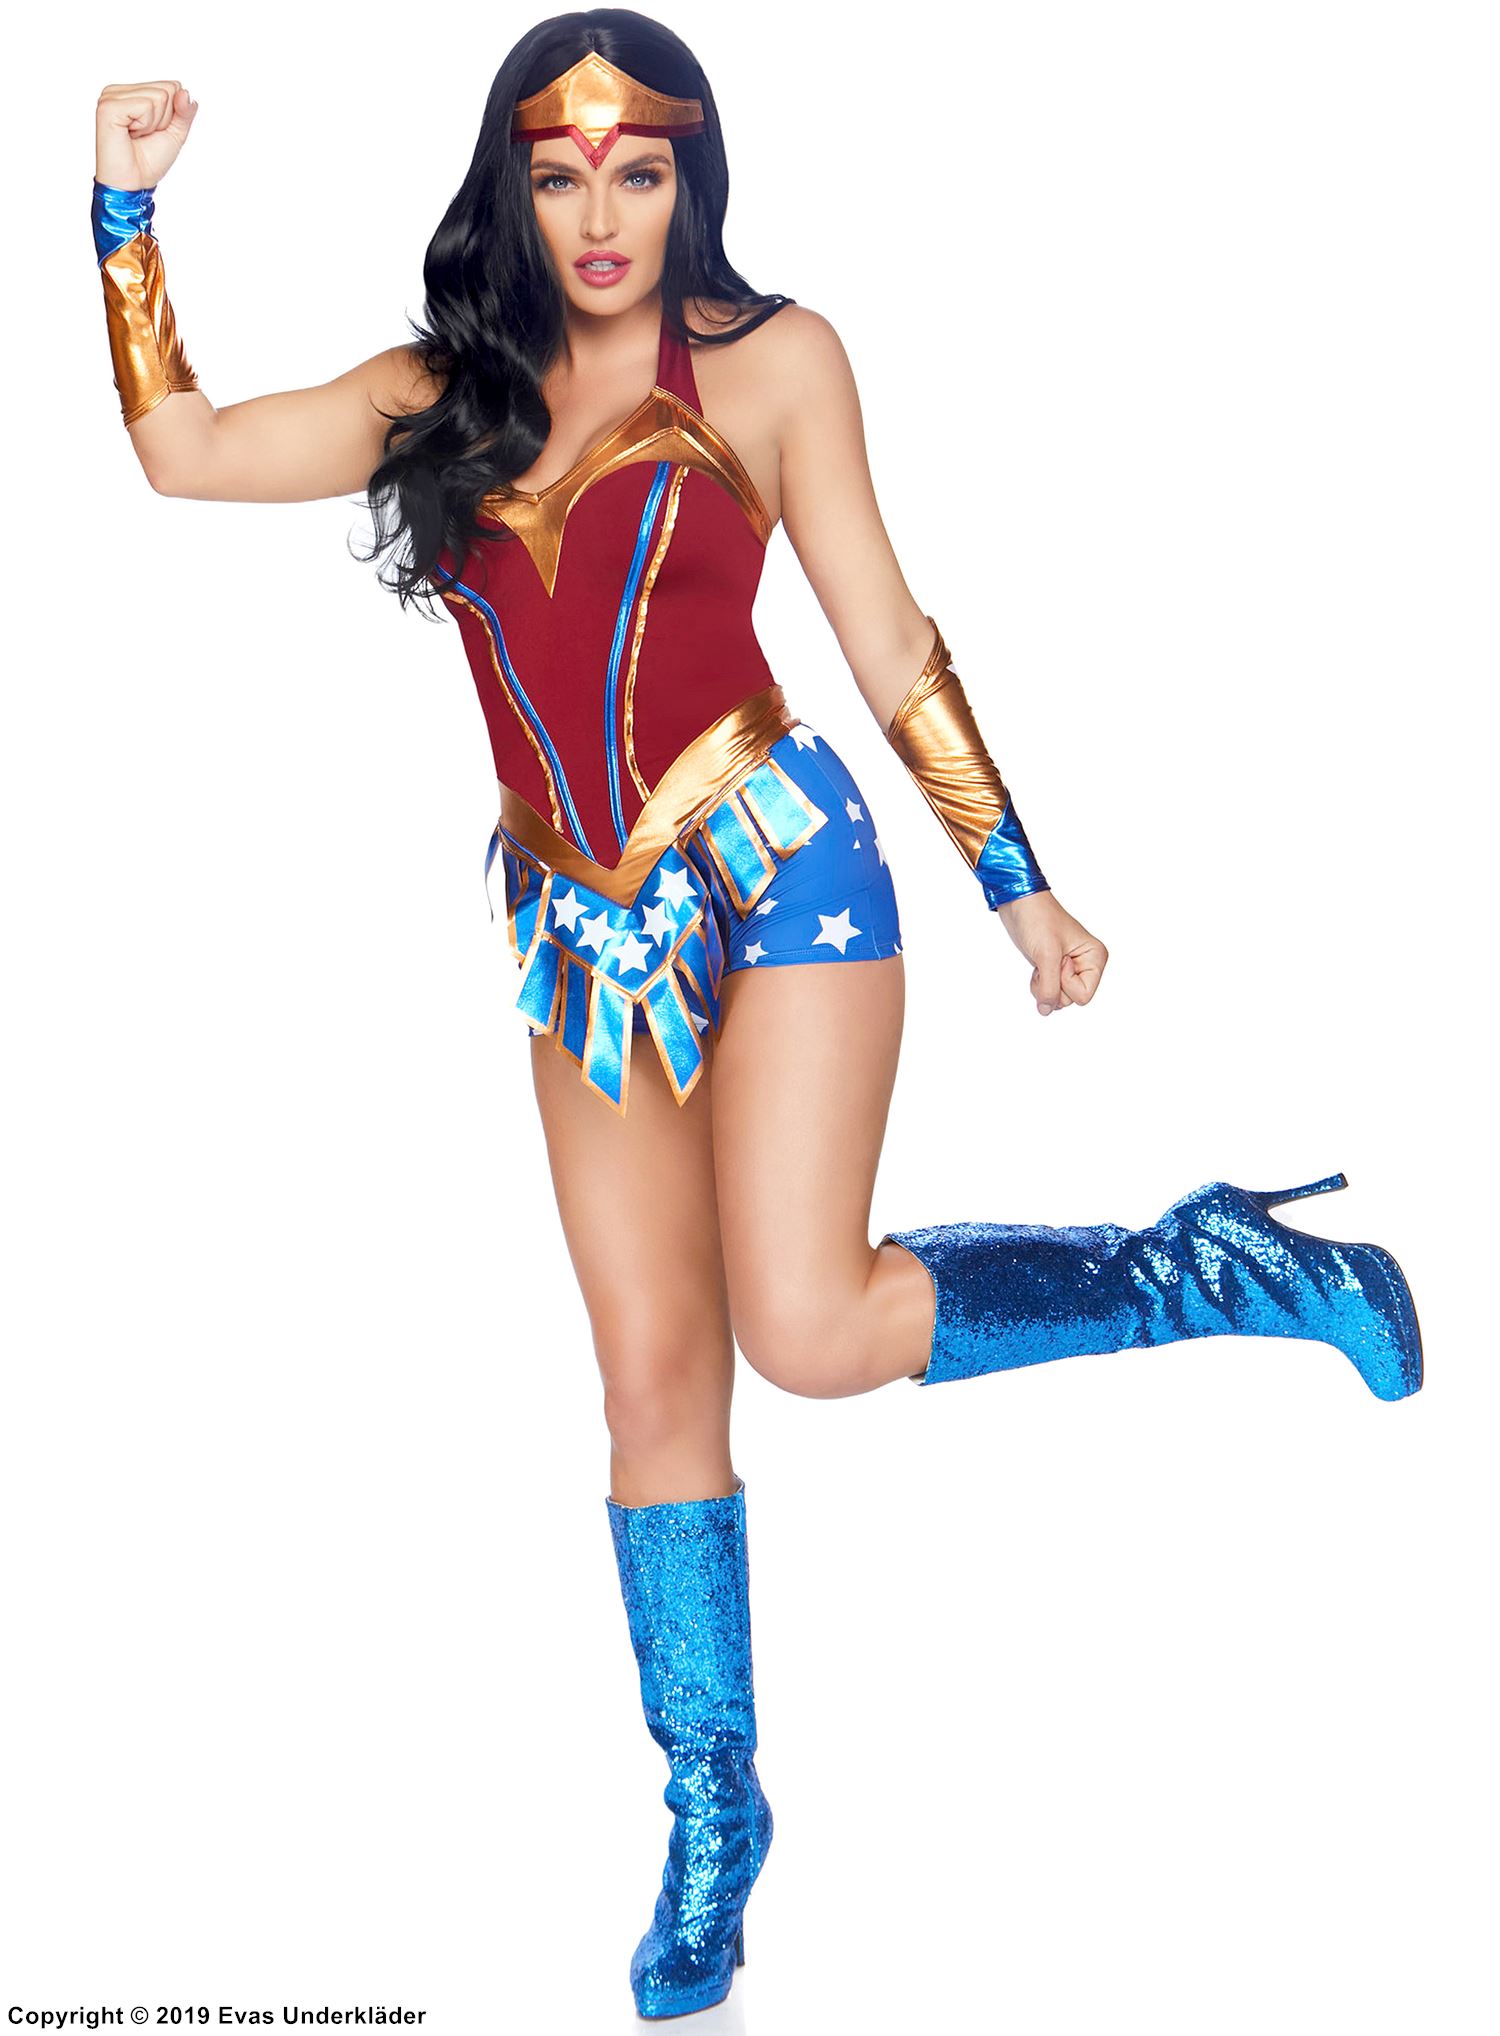 Wonder Woman, costume romper, matching accessories